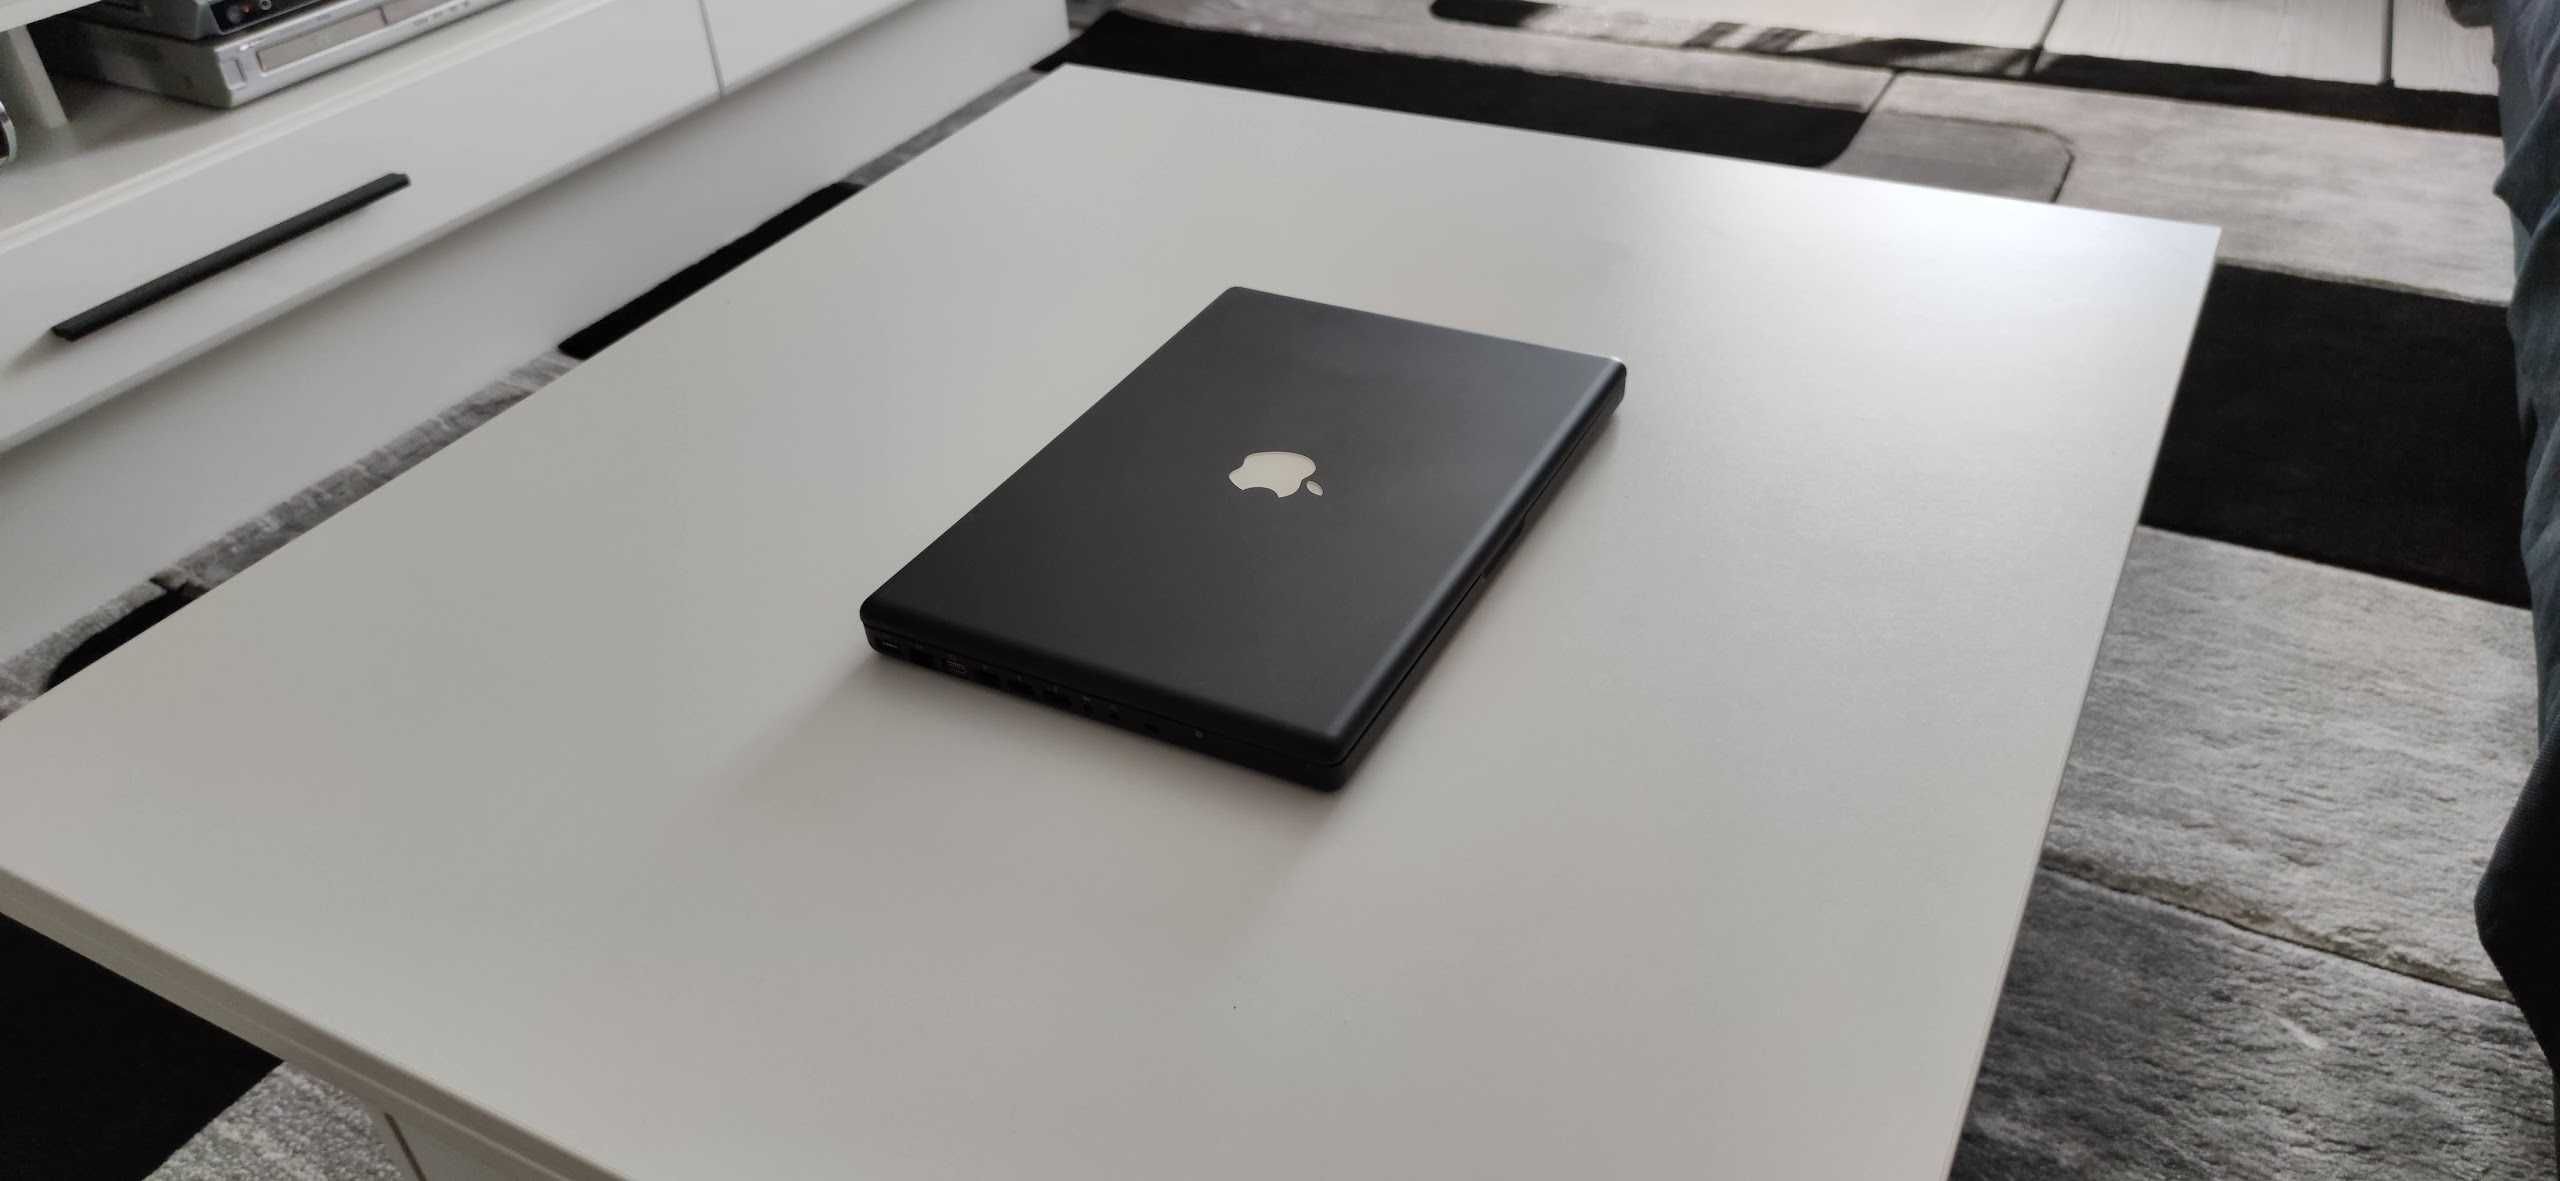 Laptop Apple Mac Book Black, model rar